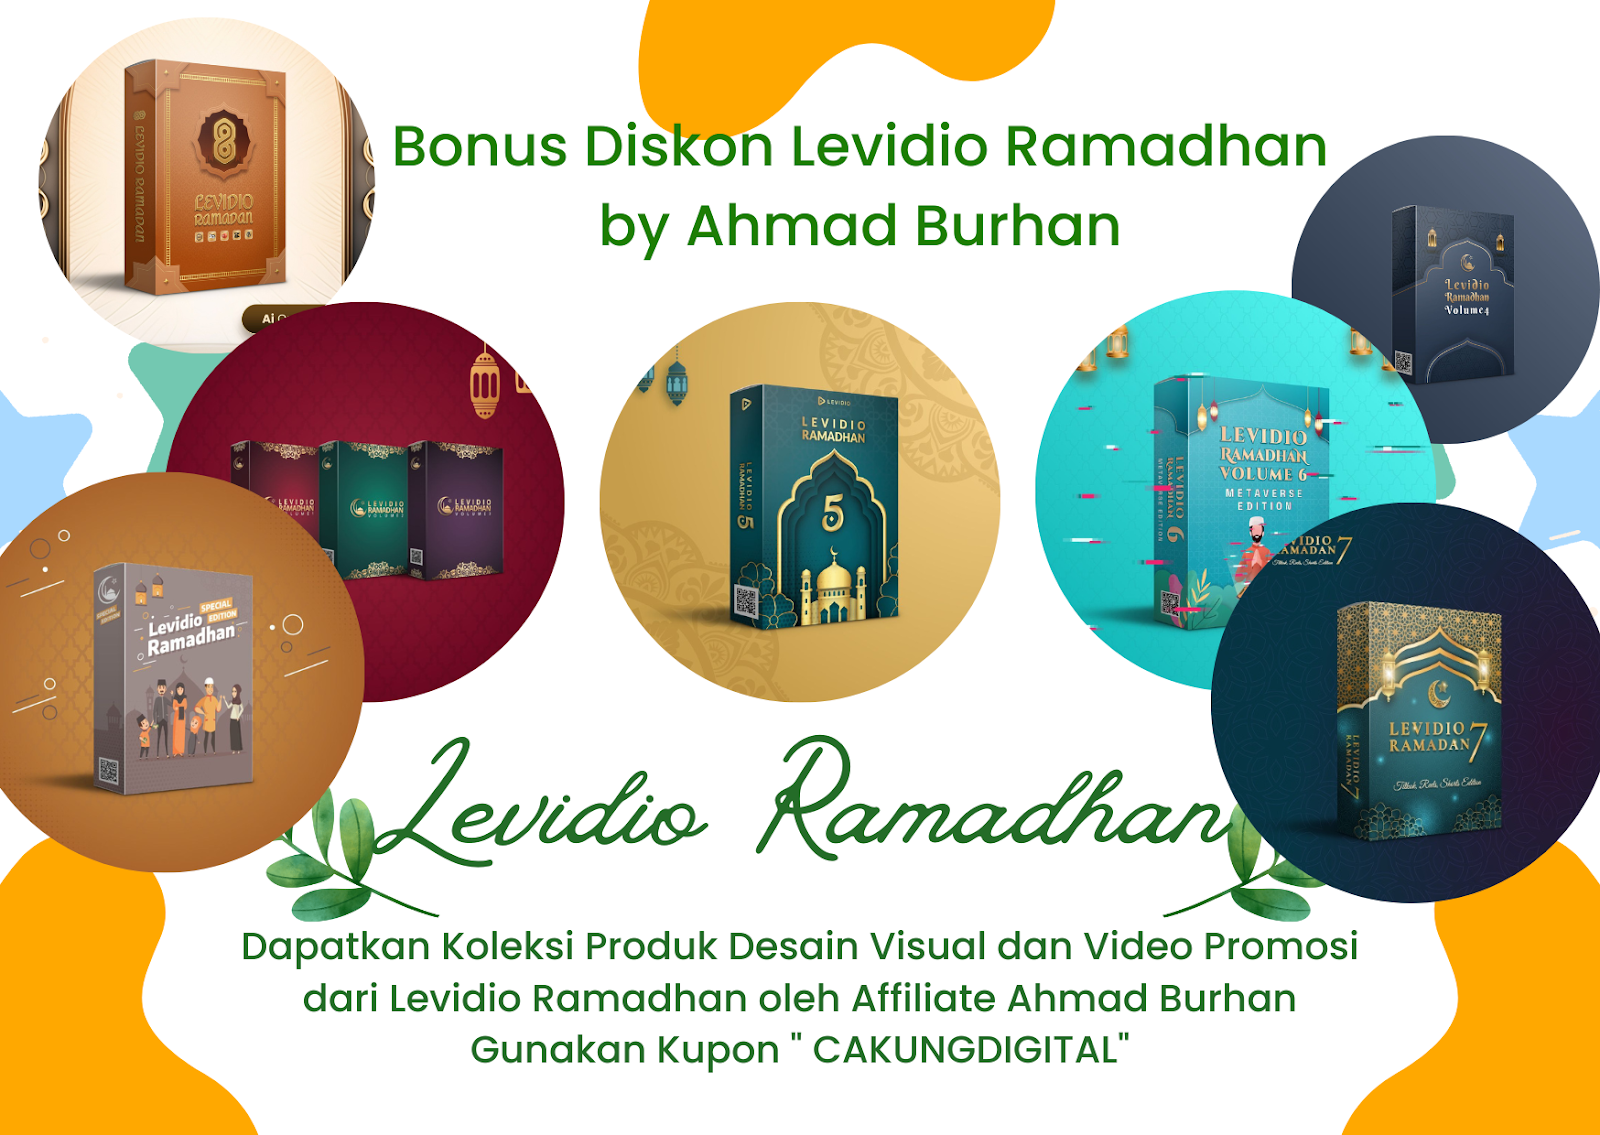 Bonus Diskon Levidio Ramadhan